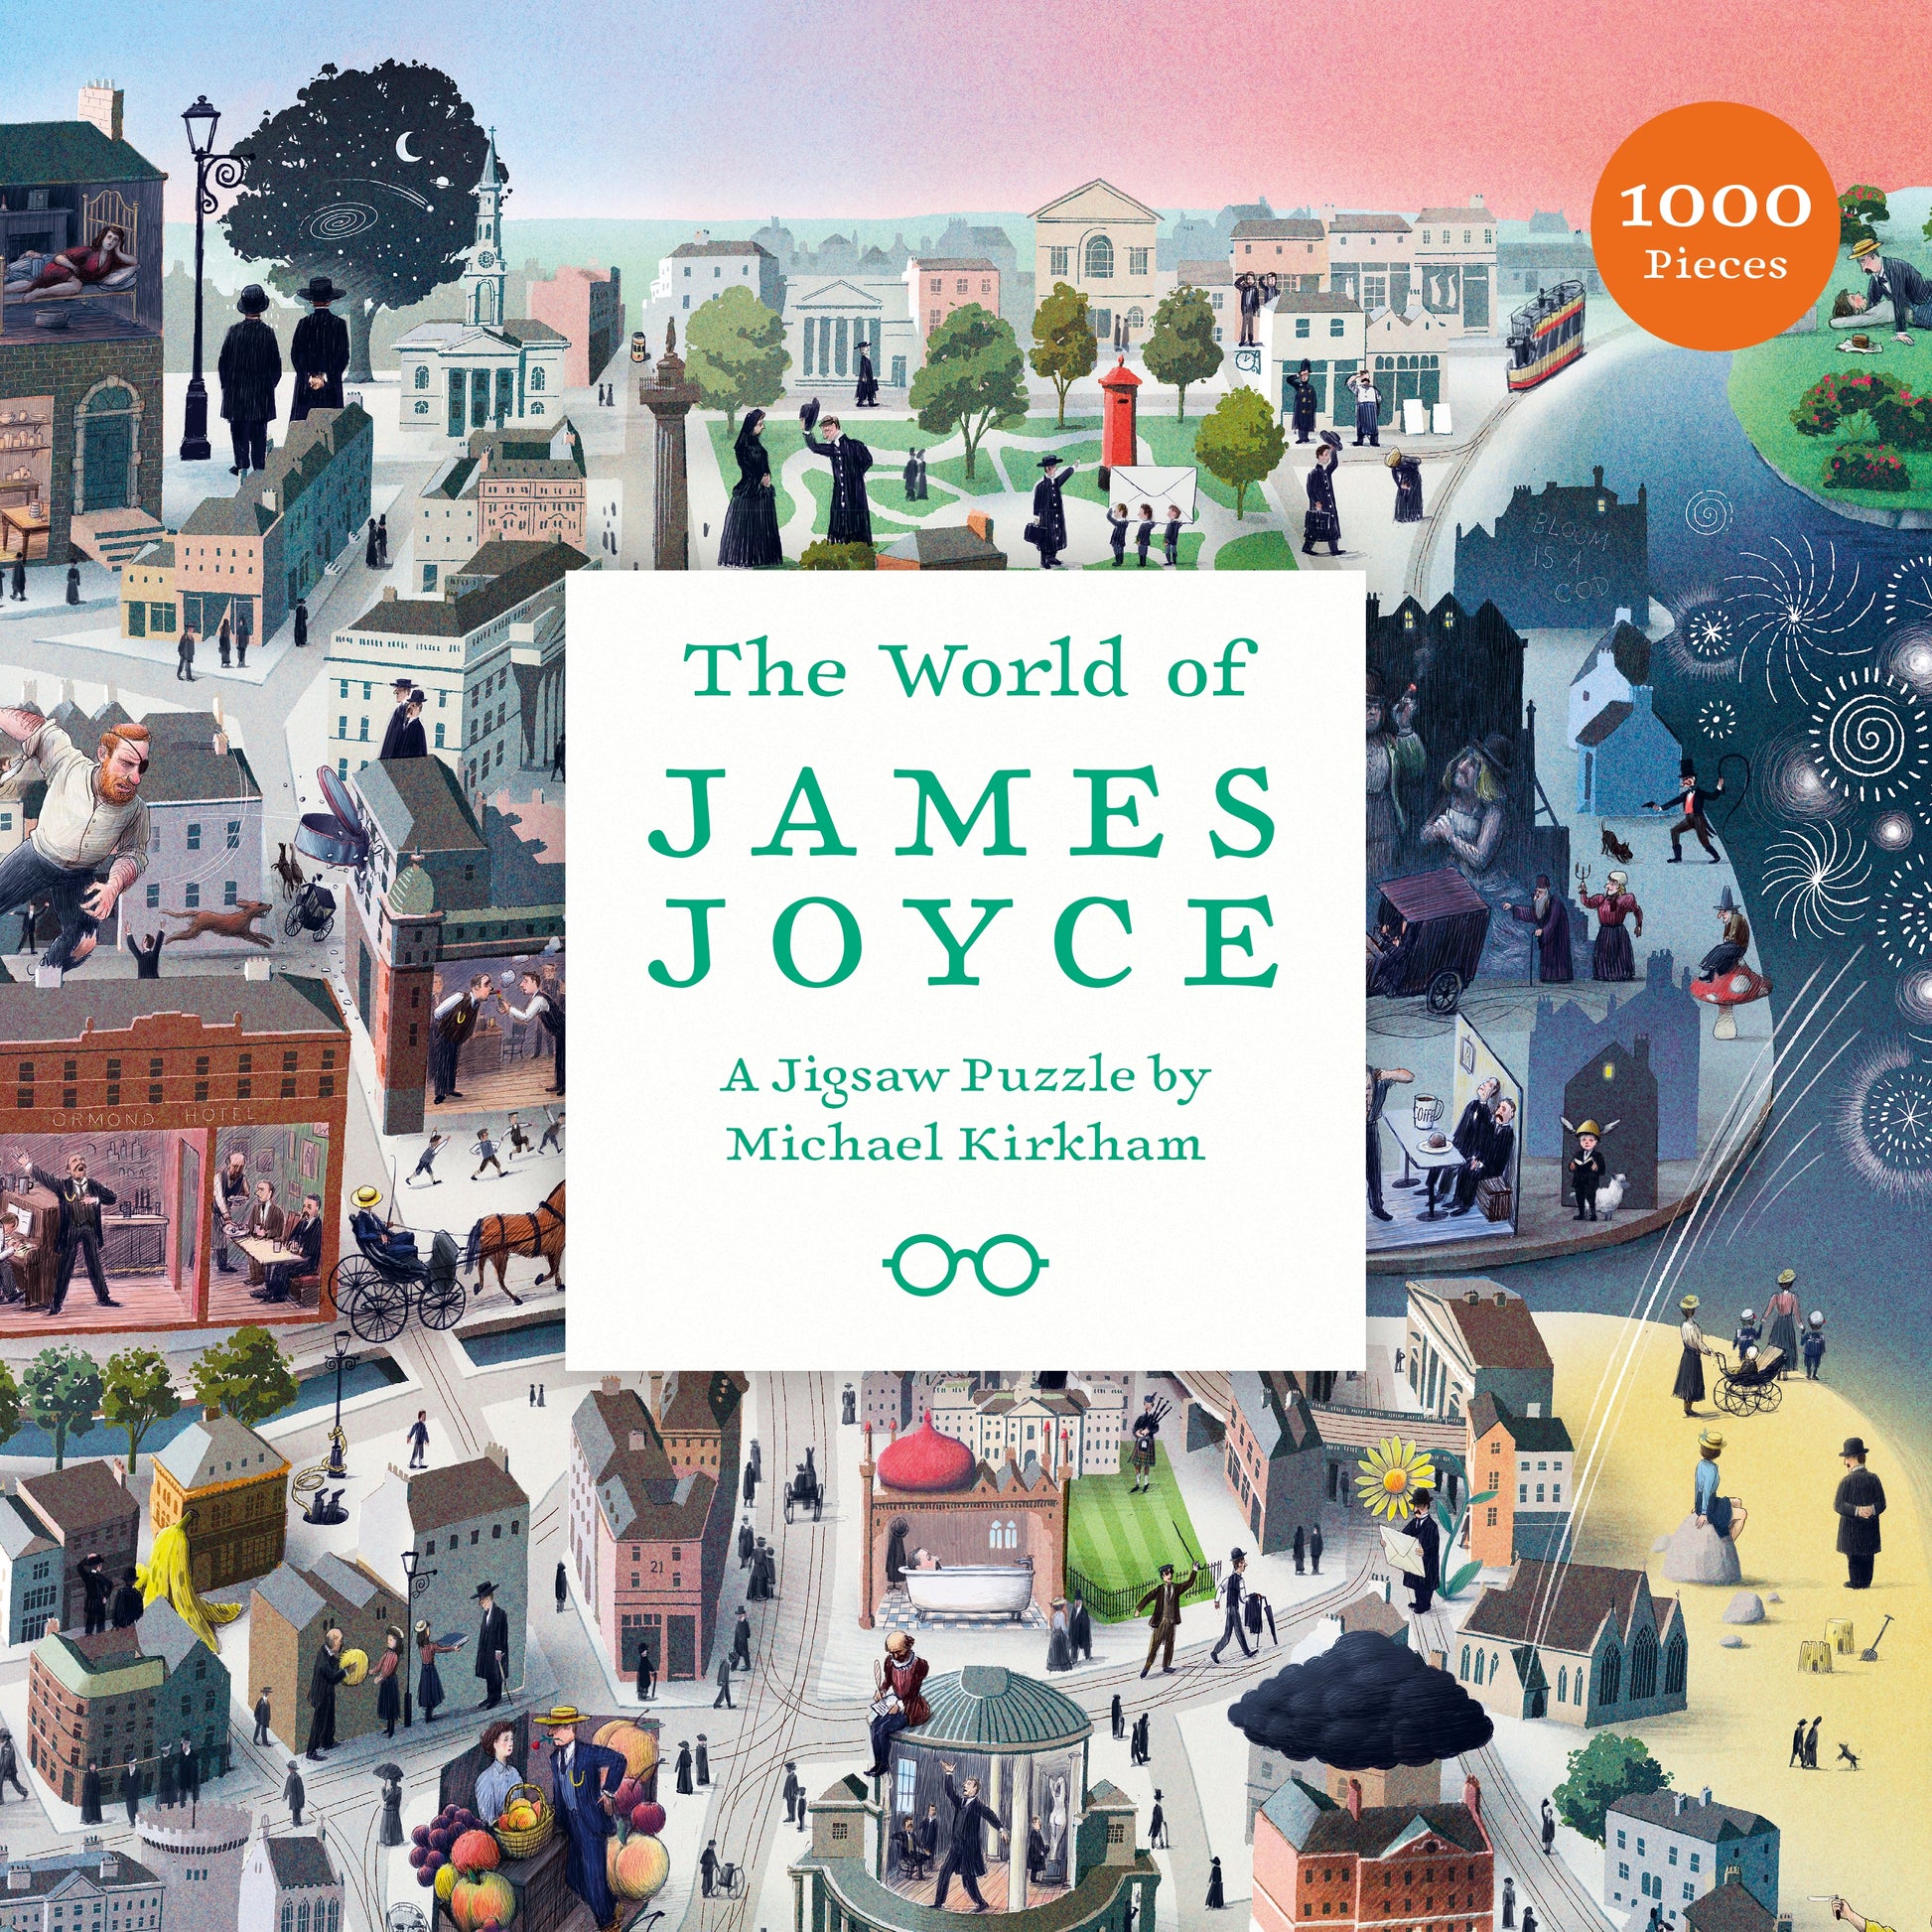 The World of James Joyce by Michael Kirkham, Laurence King Publishing